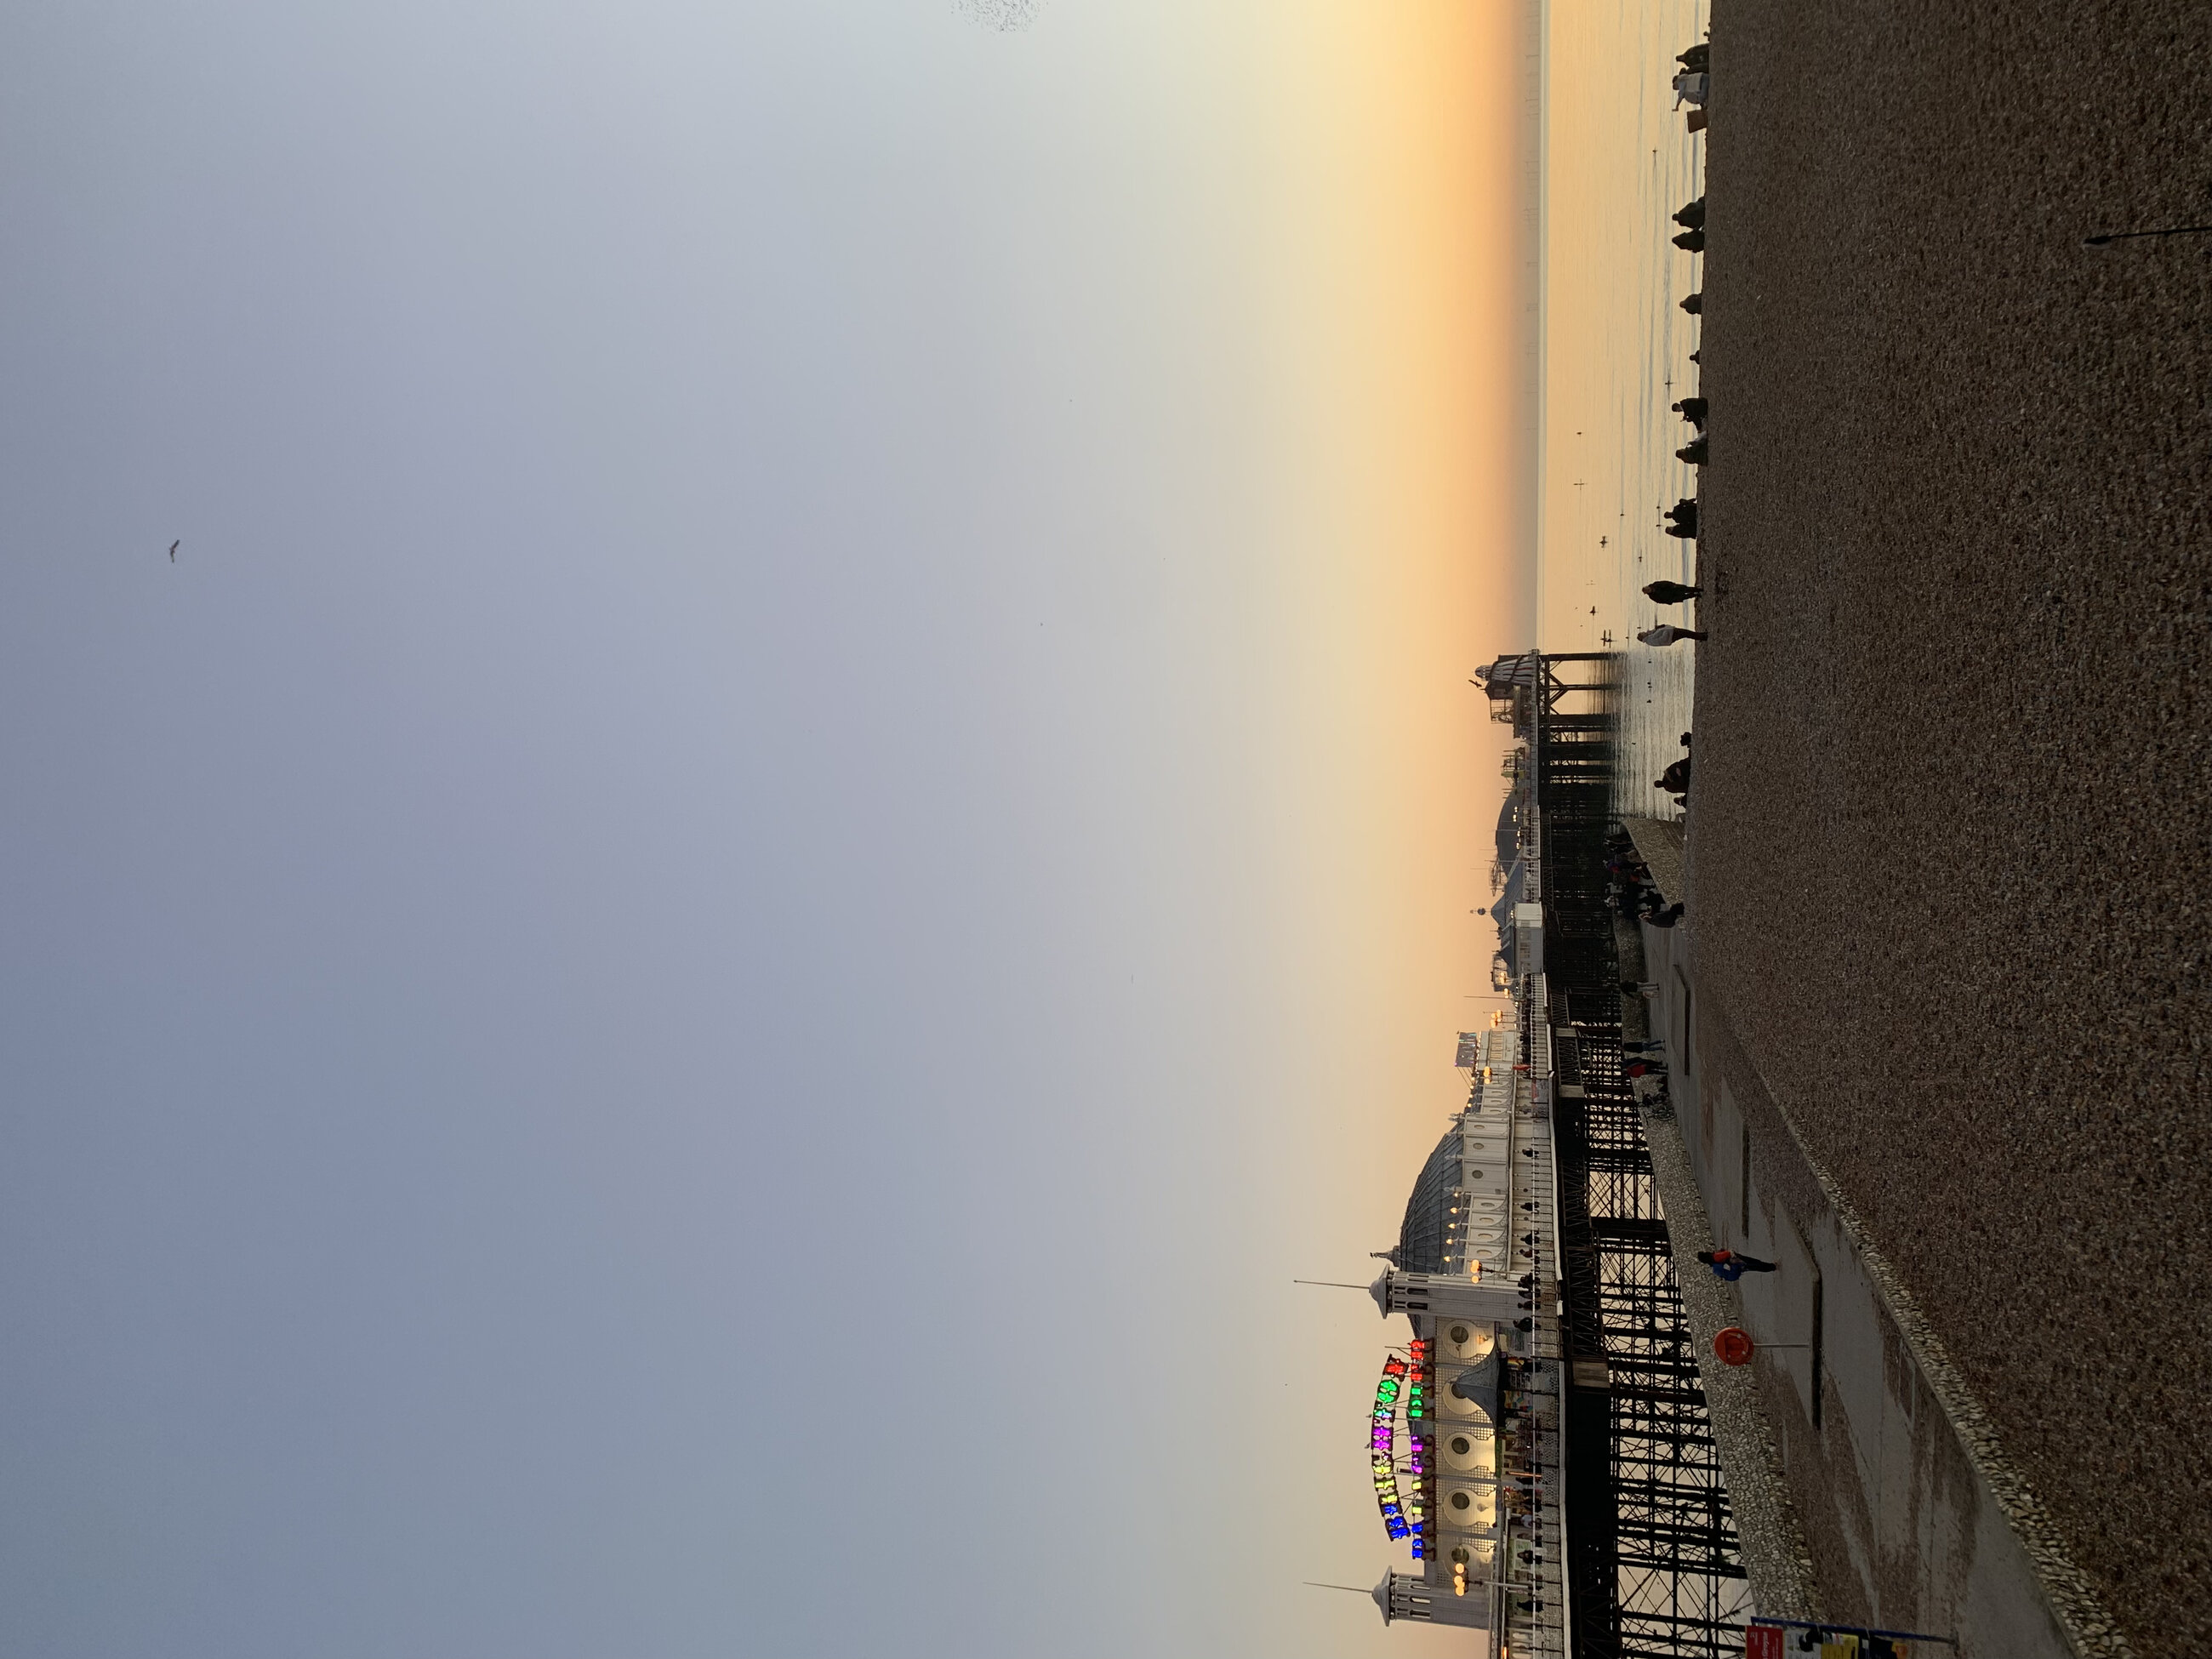 Sunset at Brighton